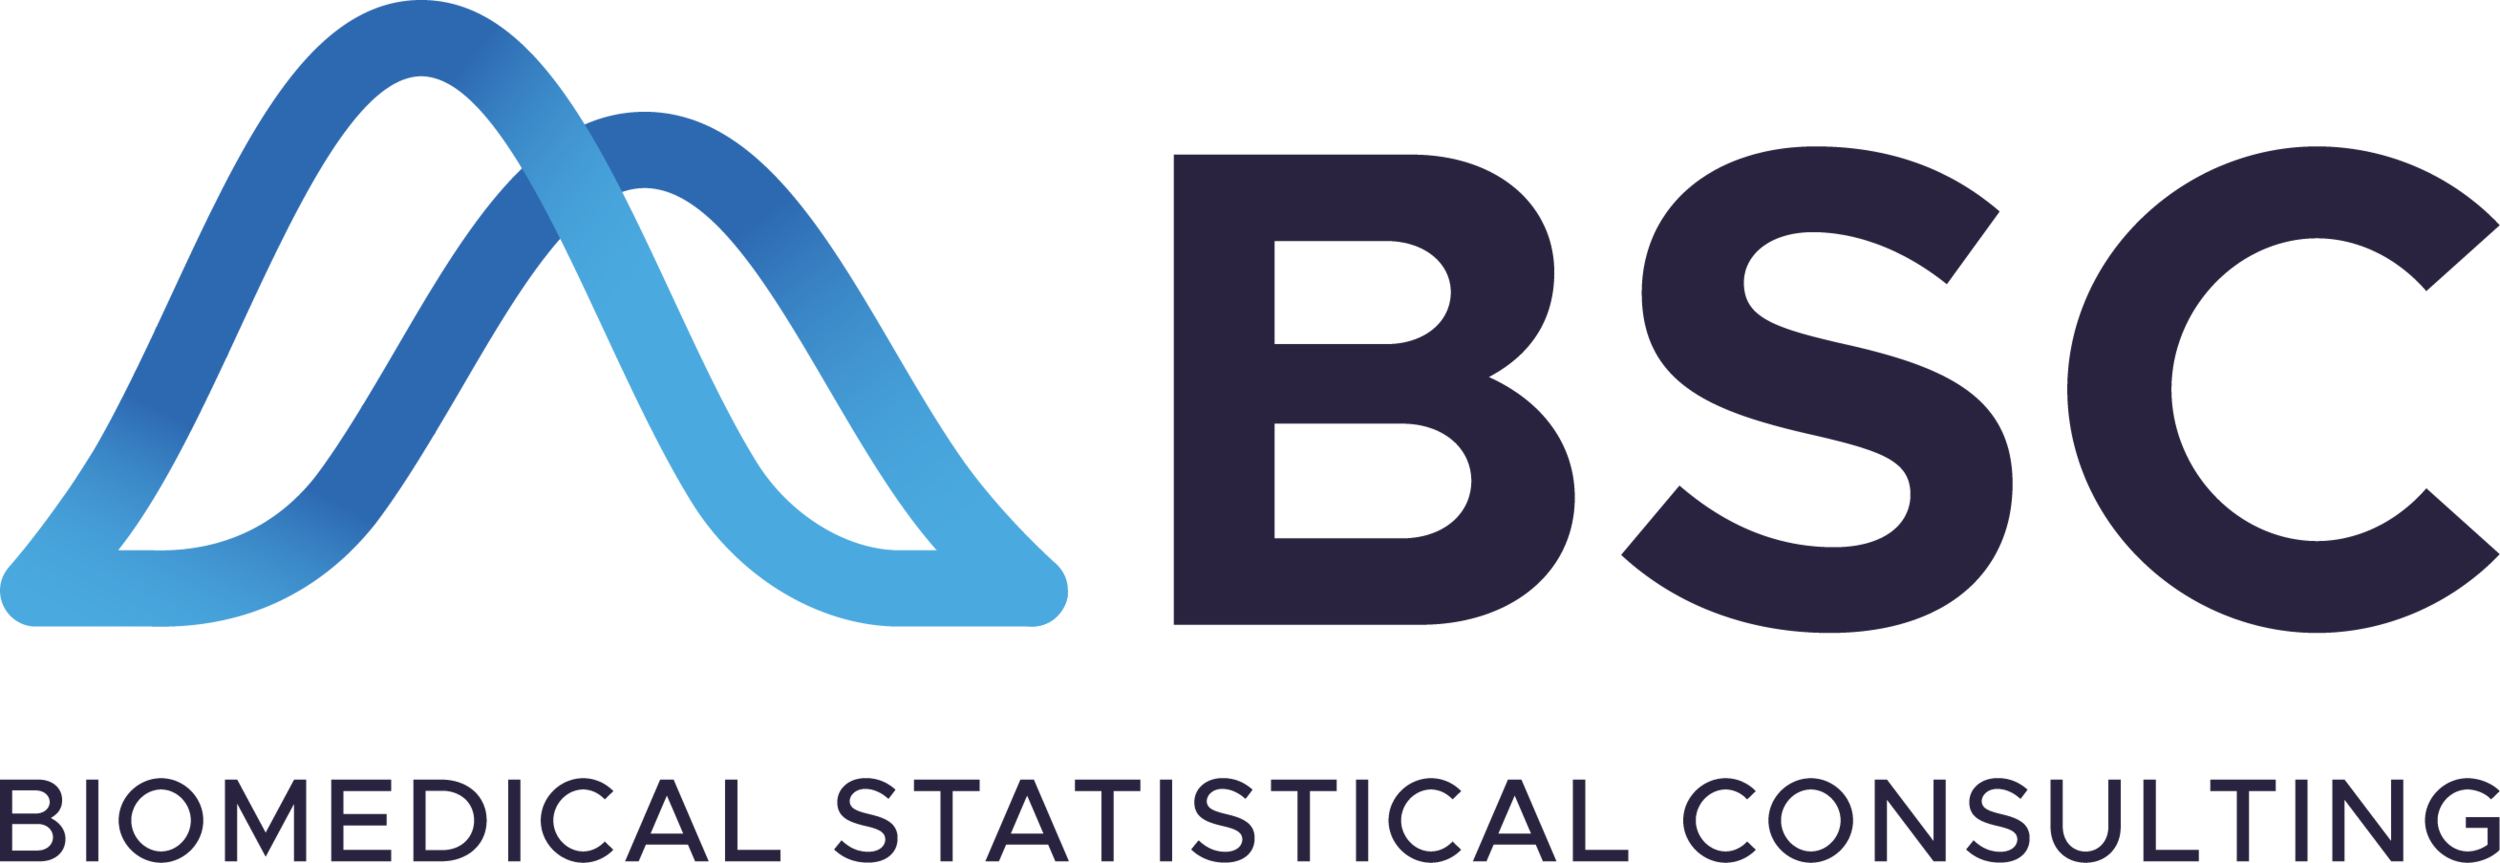 Biomedical Statistical Consulting LLC